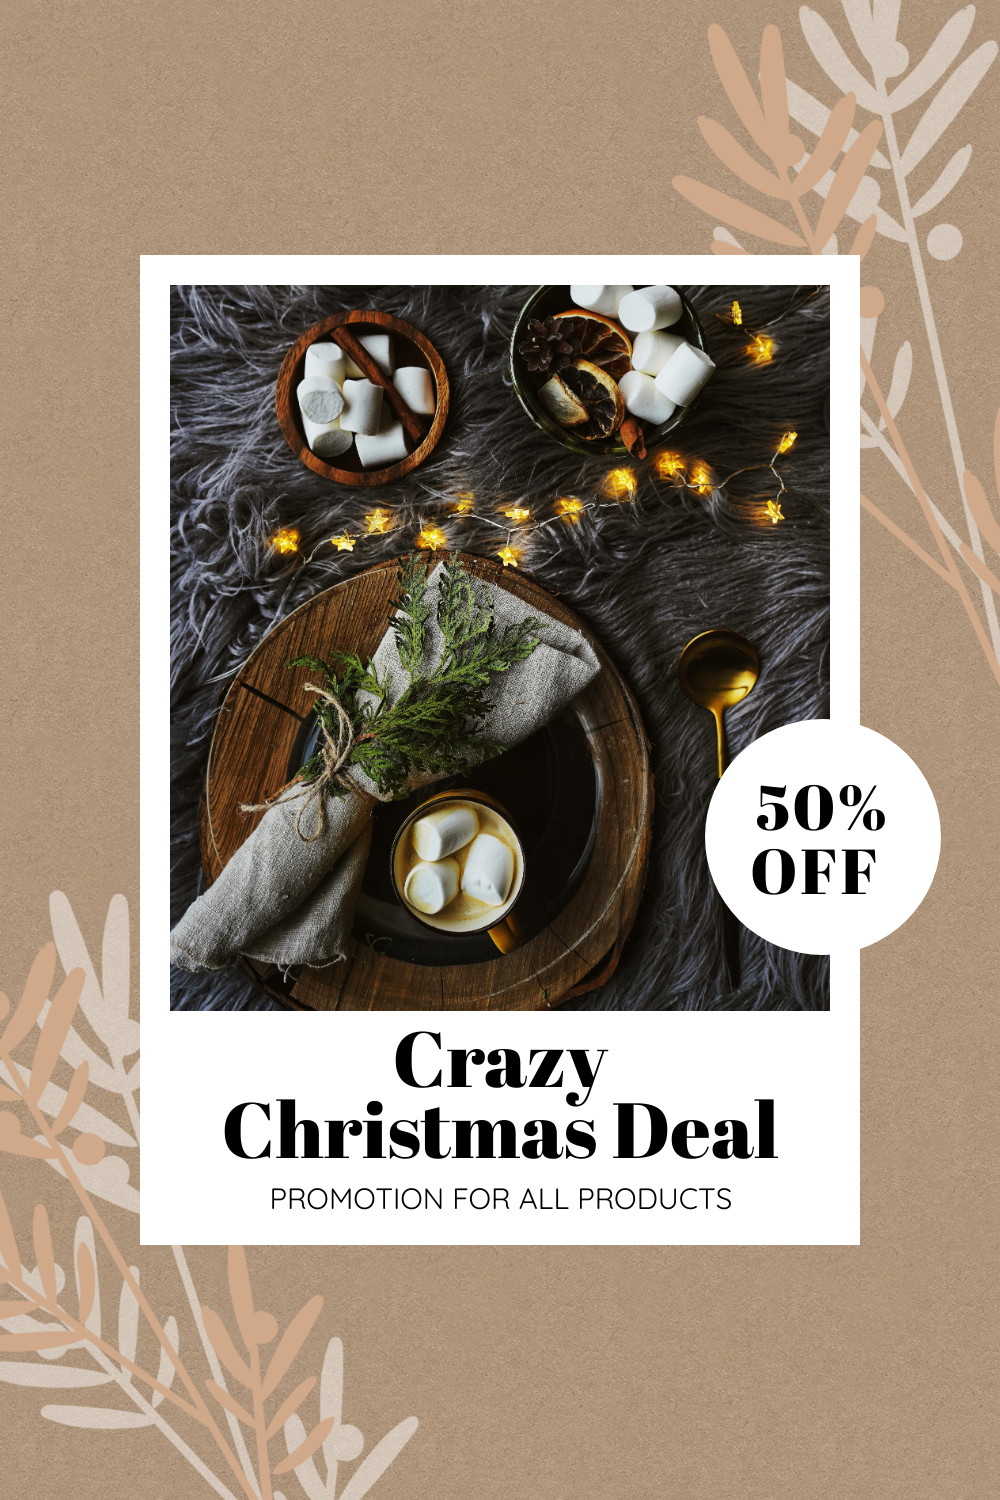 Cozy Crazy Christmas Deal Facebook Cover 820x360